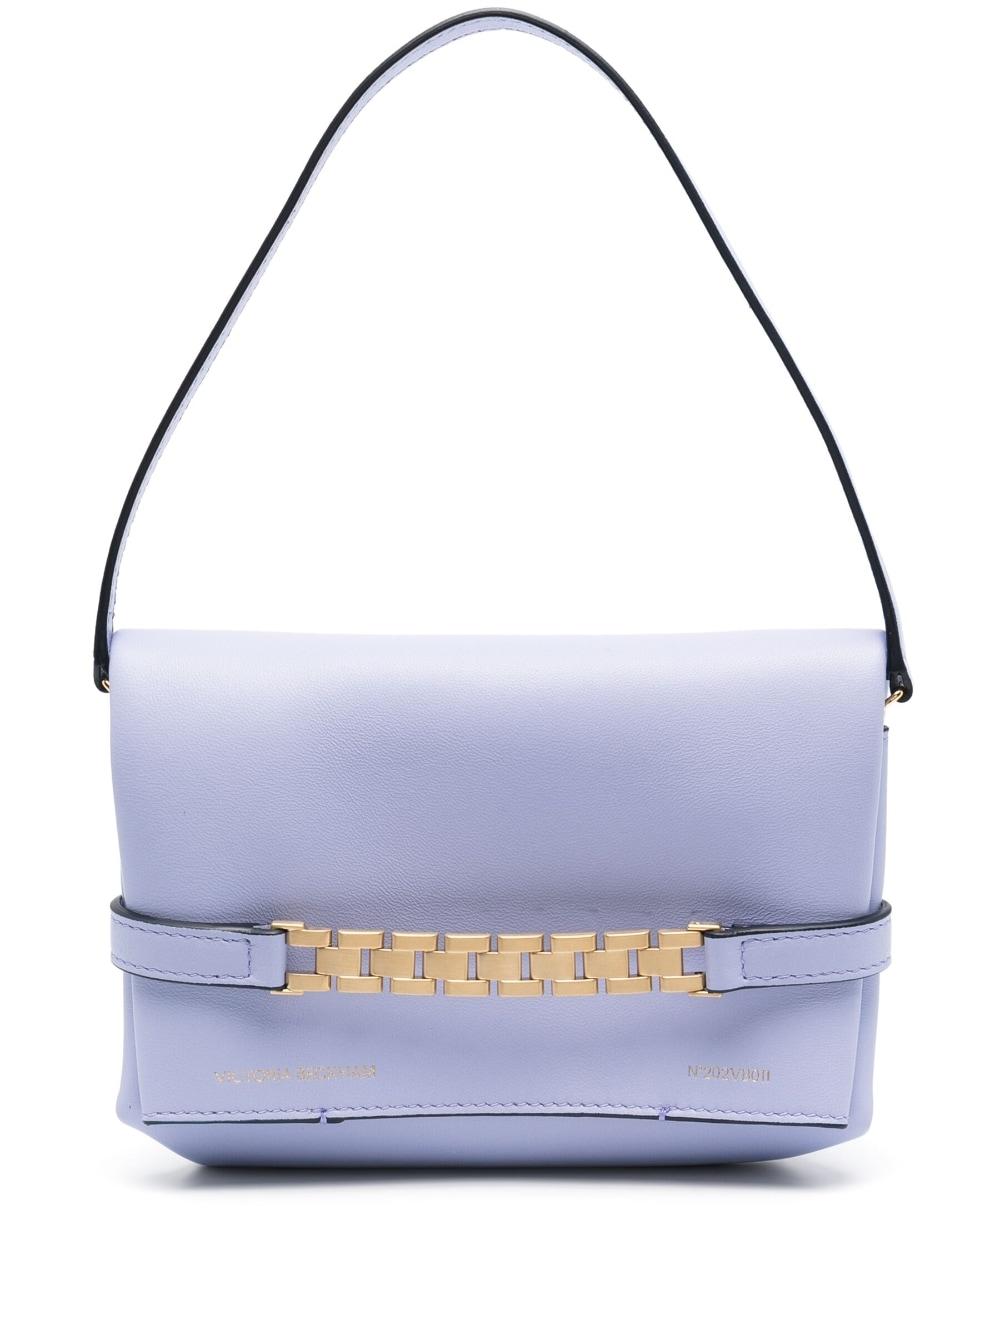 Victoria Beckham Mini Chain Pouch Tote Bag in Purple | Lyst